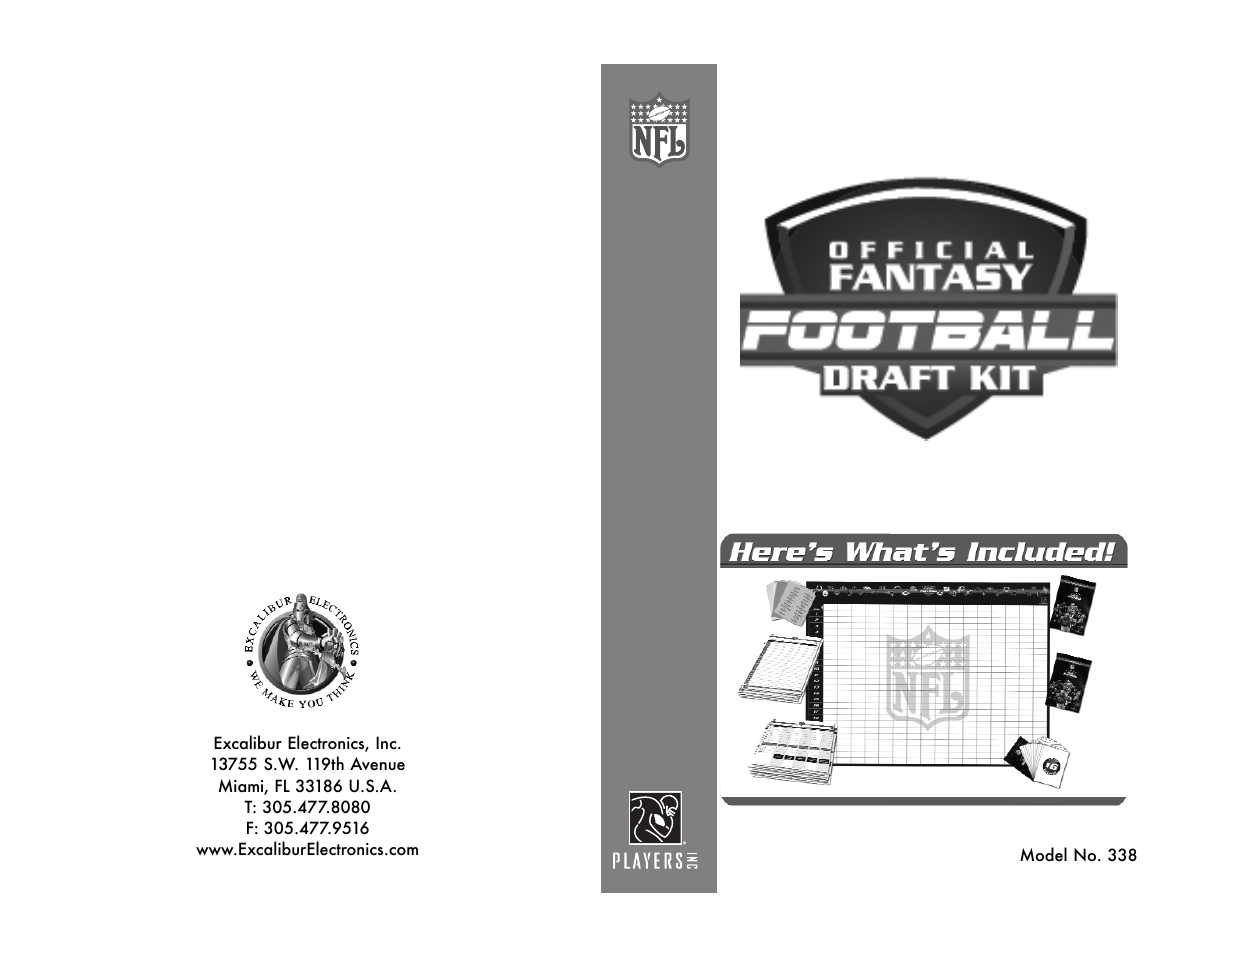 The NFL Official Fantasy Football Draft Kit 338